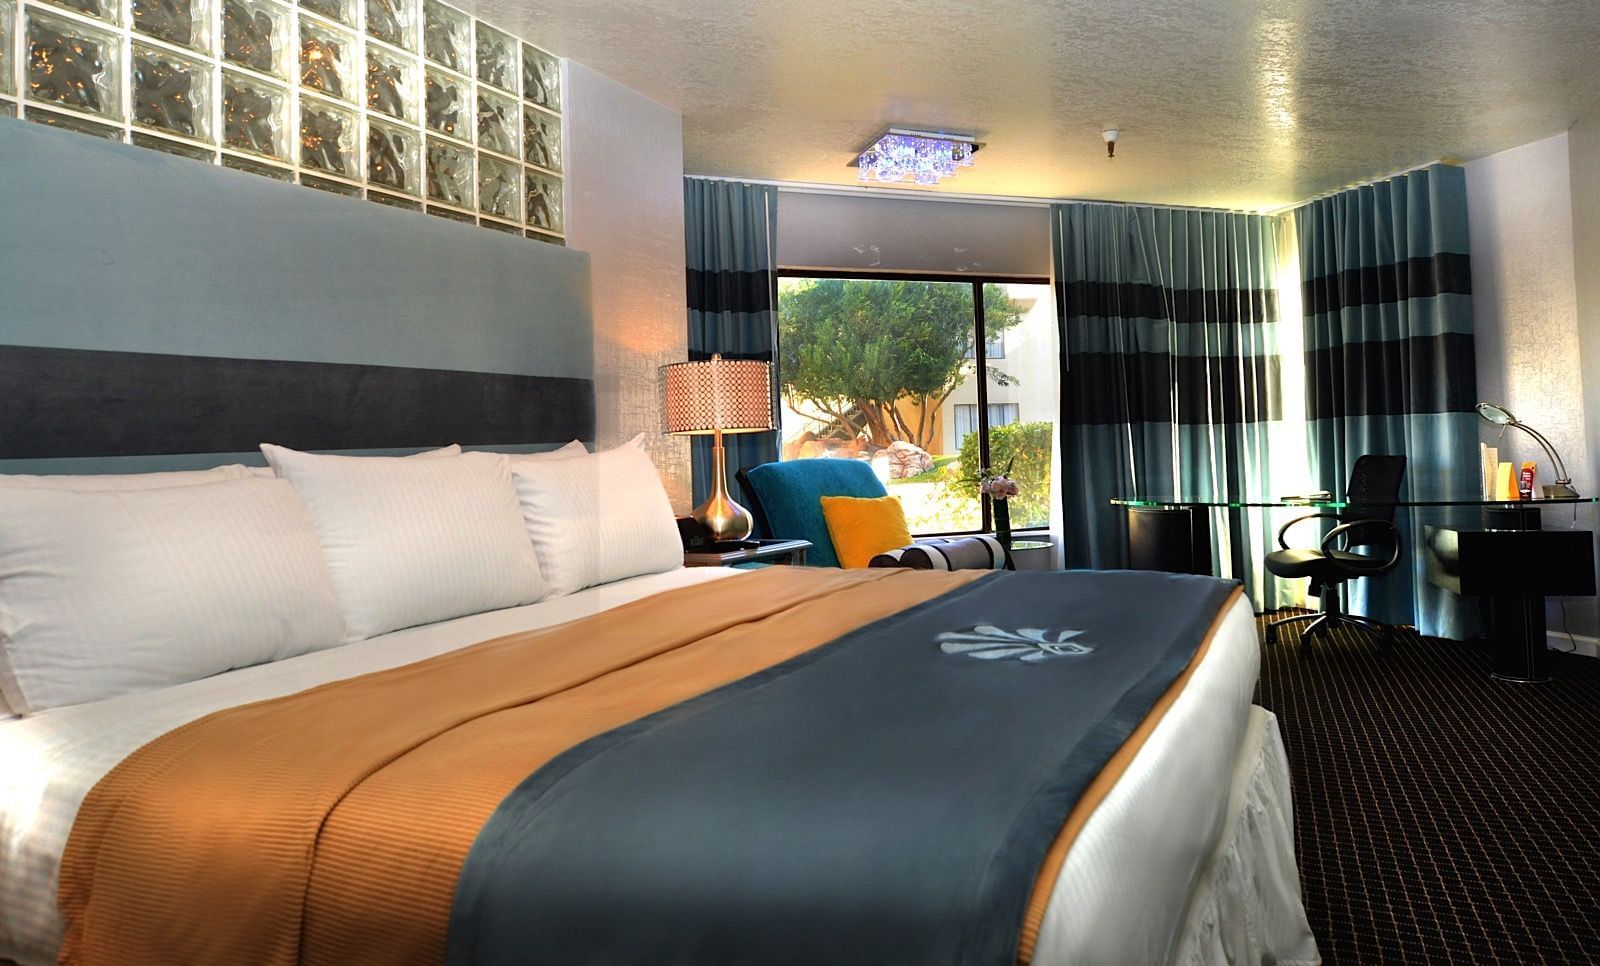 Lv type 108 bedding sets duvet cover lv bedroom sets luxury brand